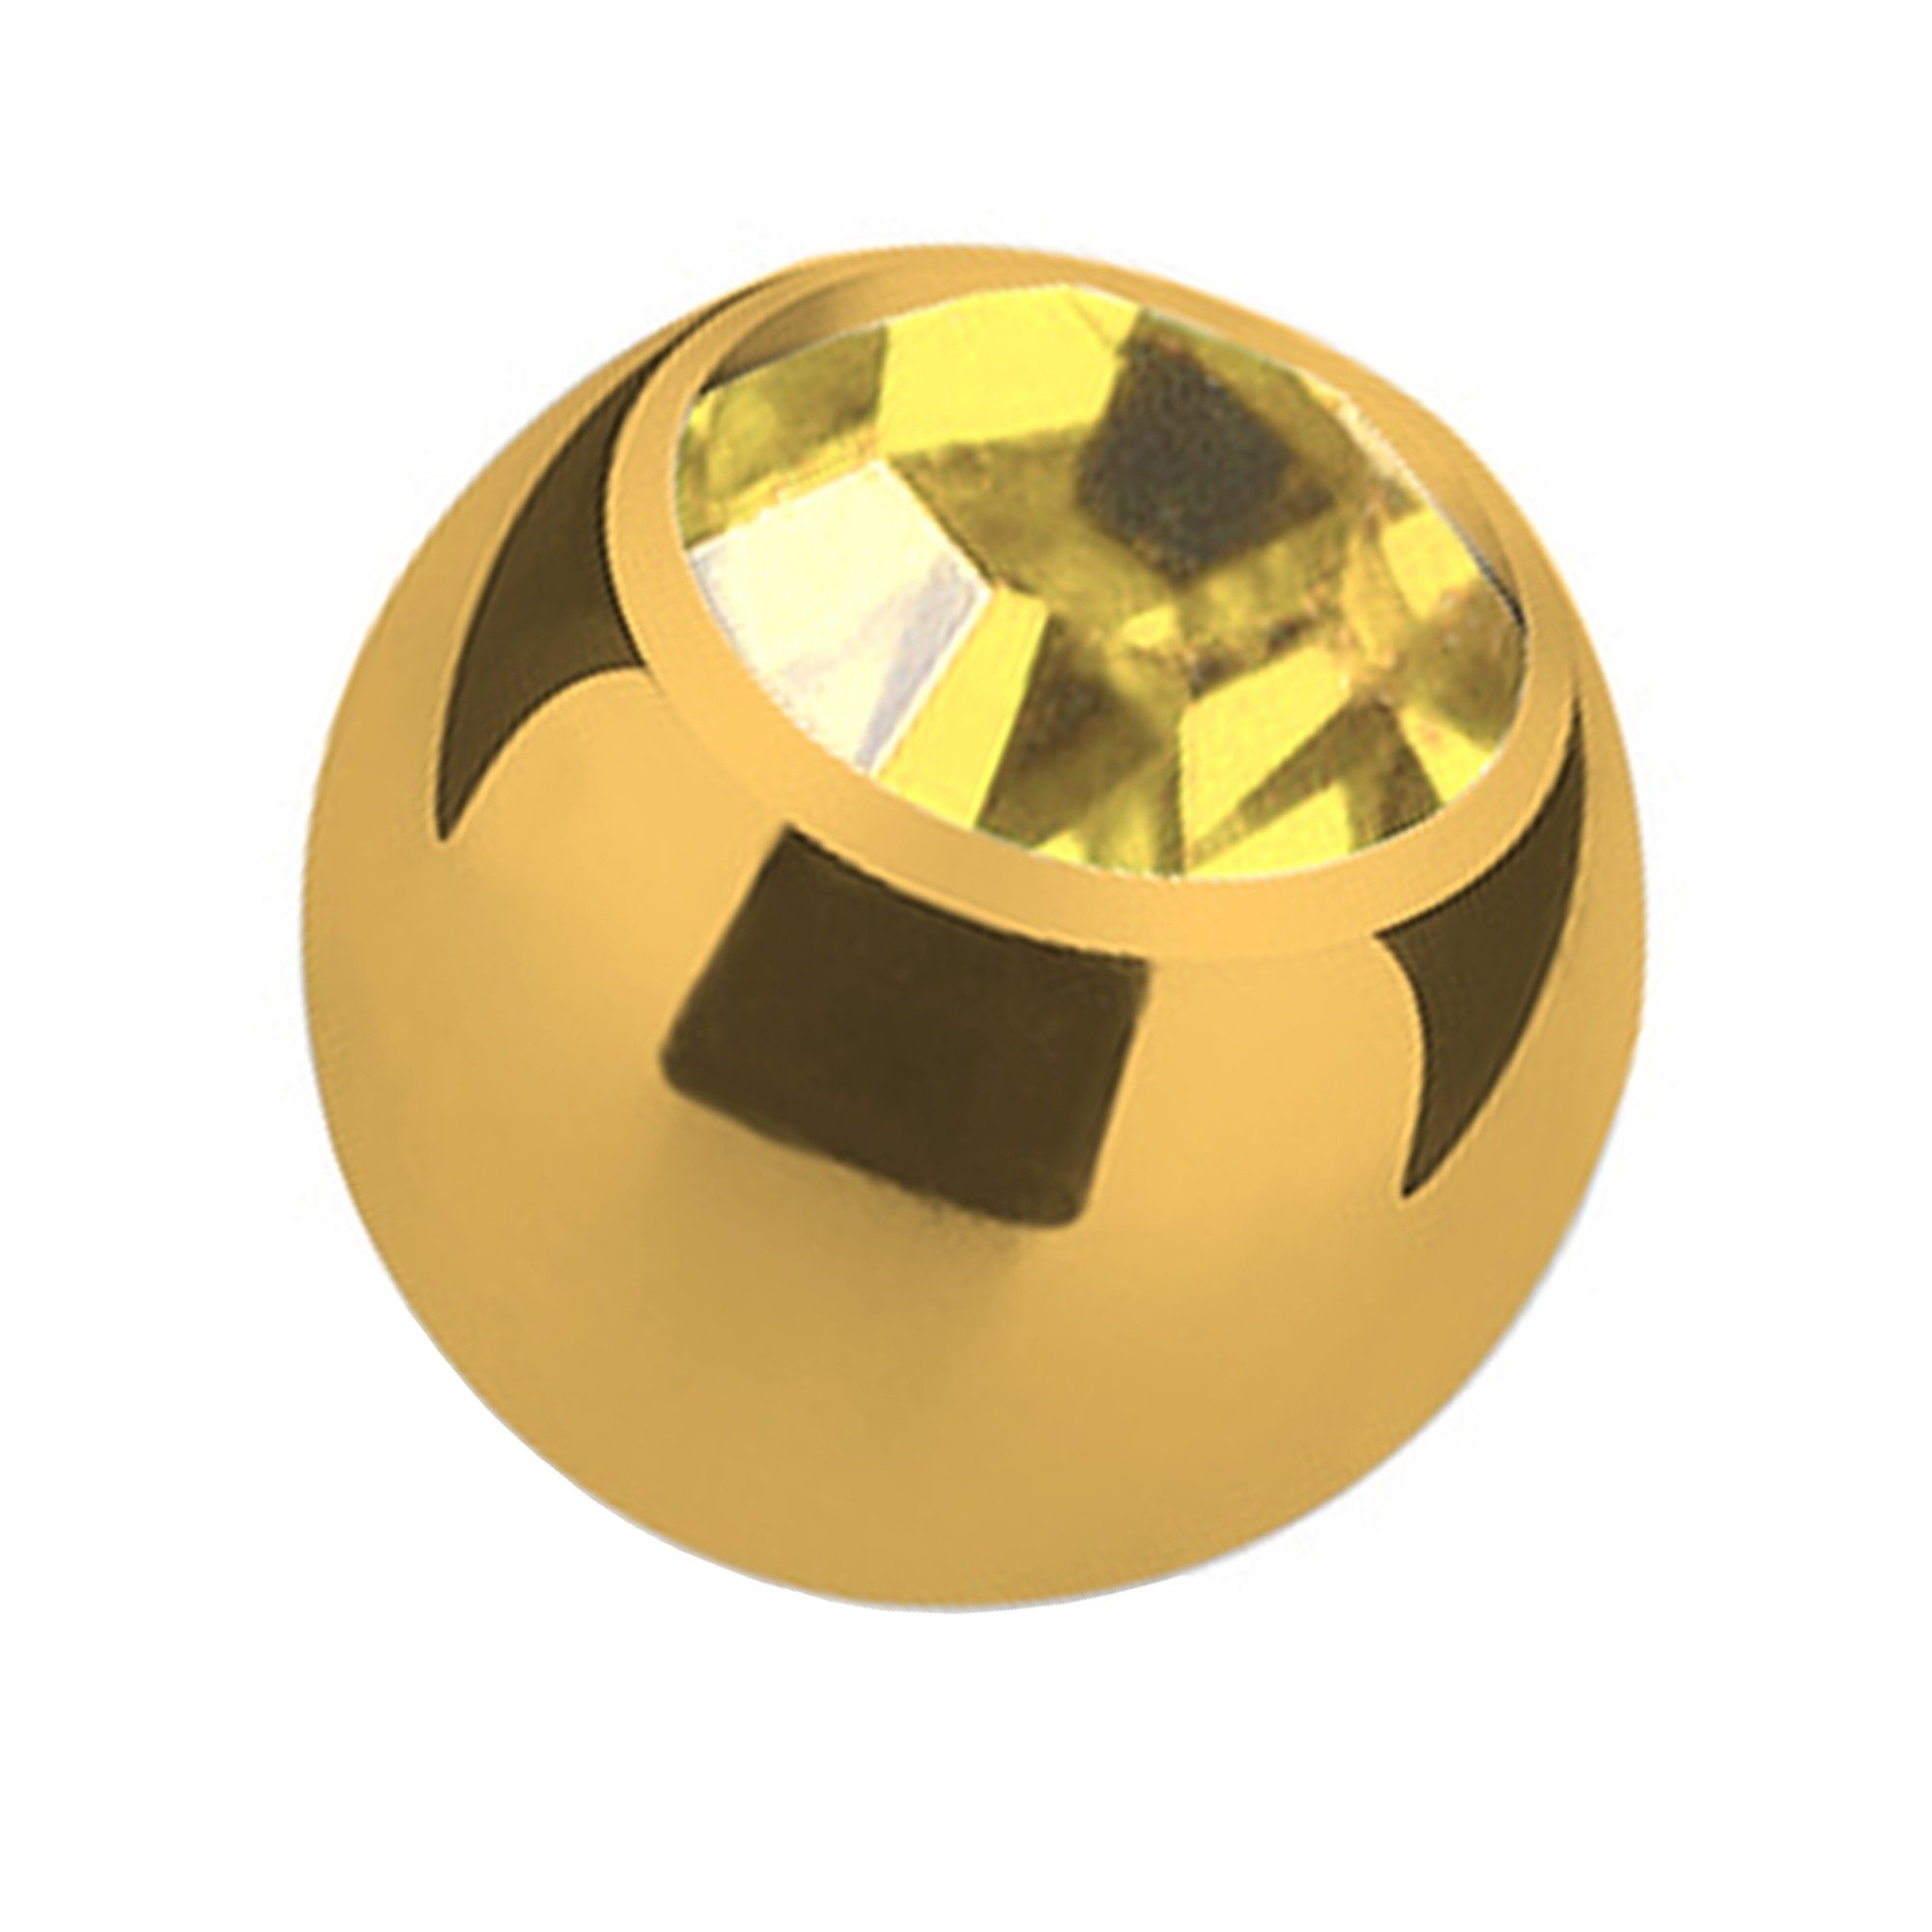 Taffstyle Piercing-Set Piercing Ersatz Schraubkugel Gold mit Kristall, Kugel Verschluss Verschlusskugel Ersatzteile Edelstahl Gold mit Strass